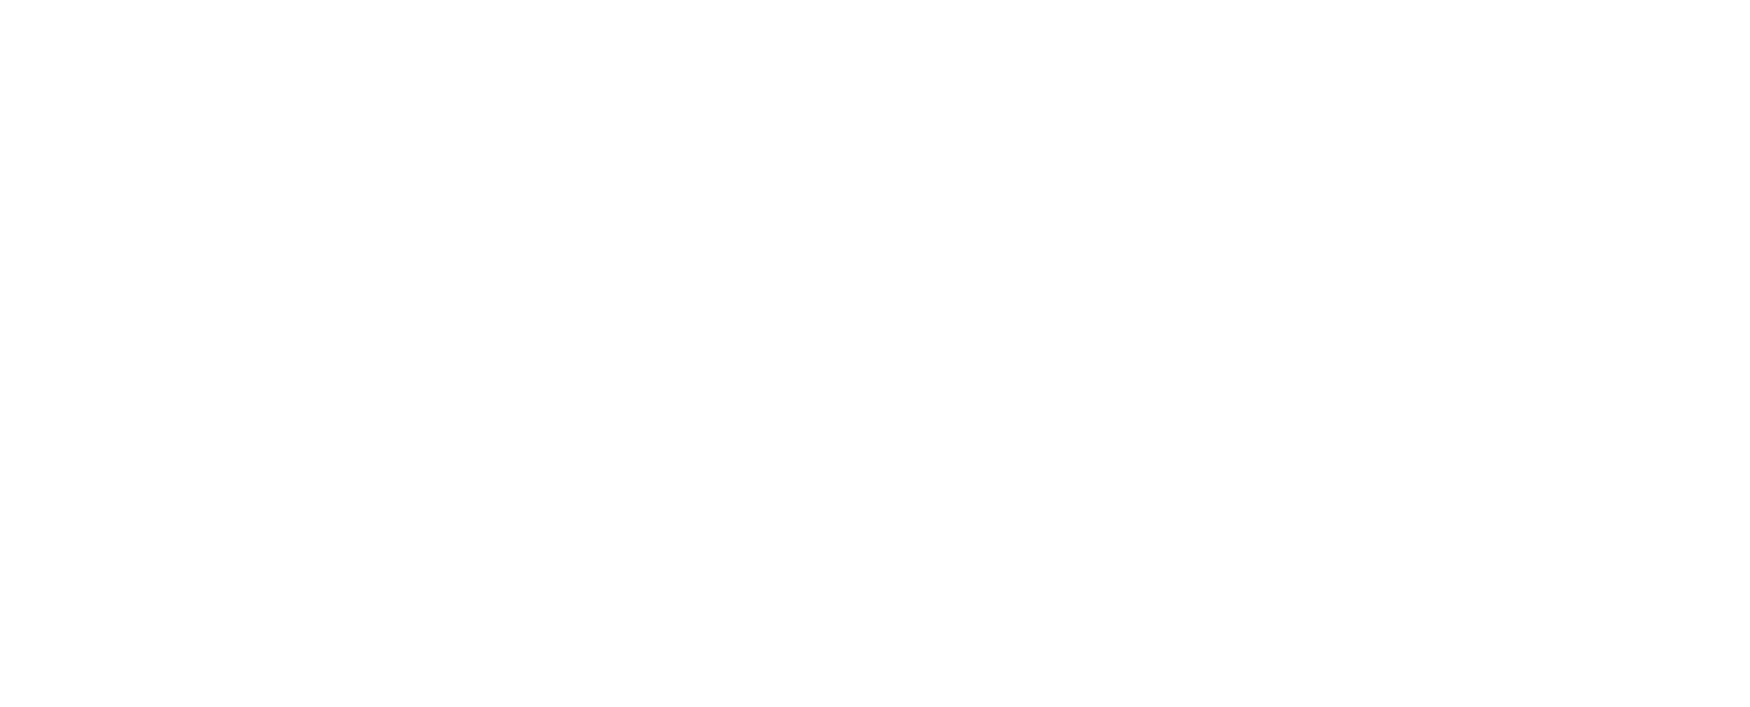 Mid-State Metal Works logo